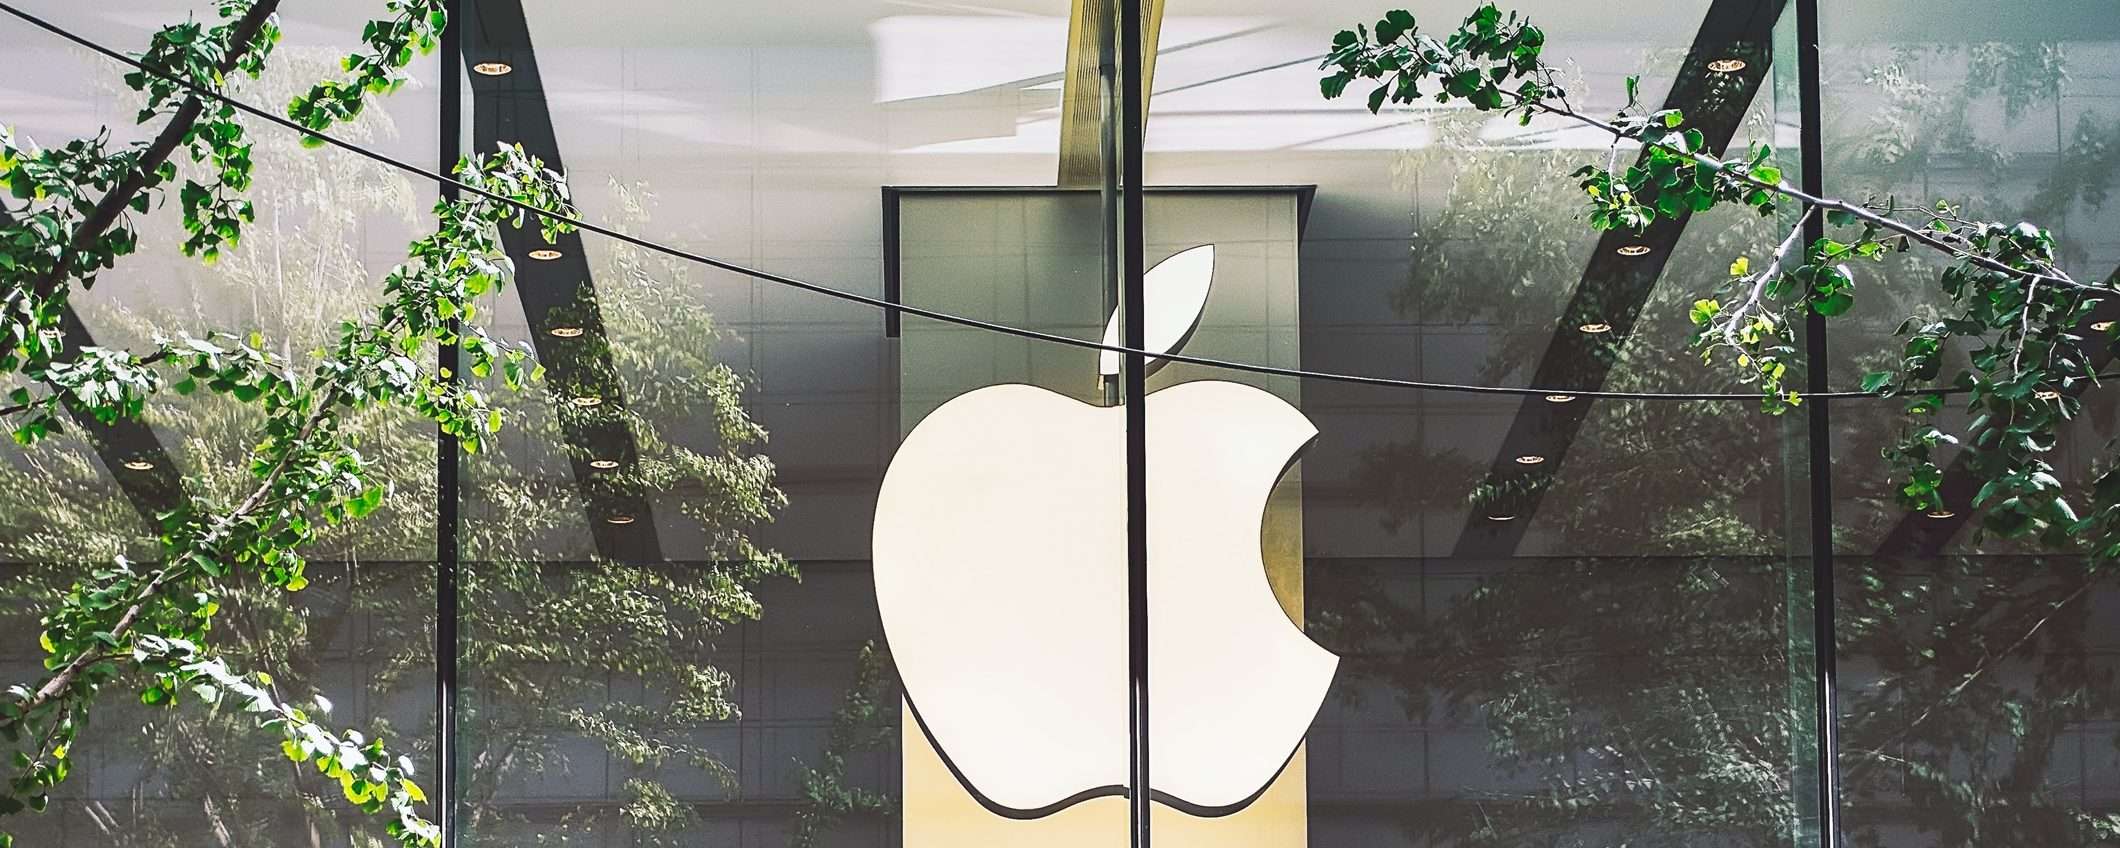 Apple si è rassegnata agli app store di terze parti